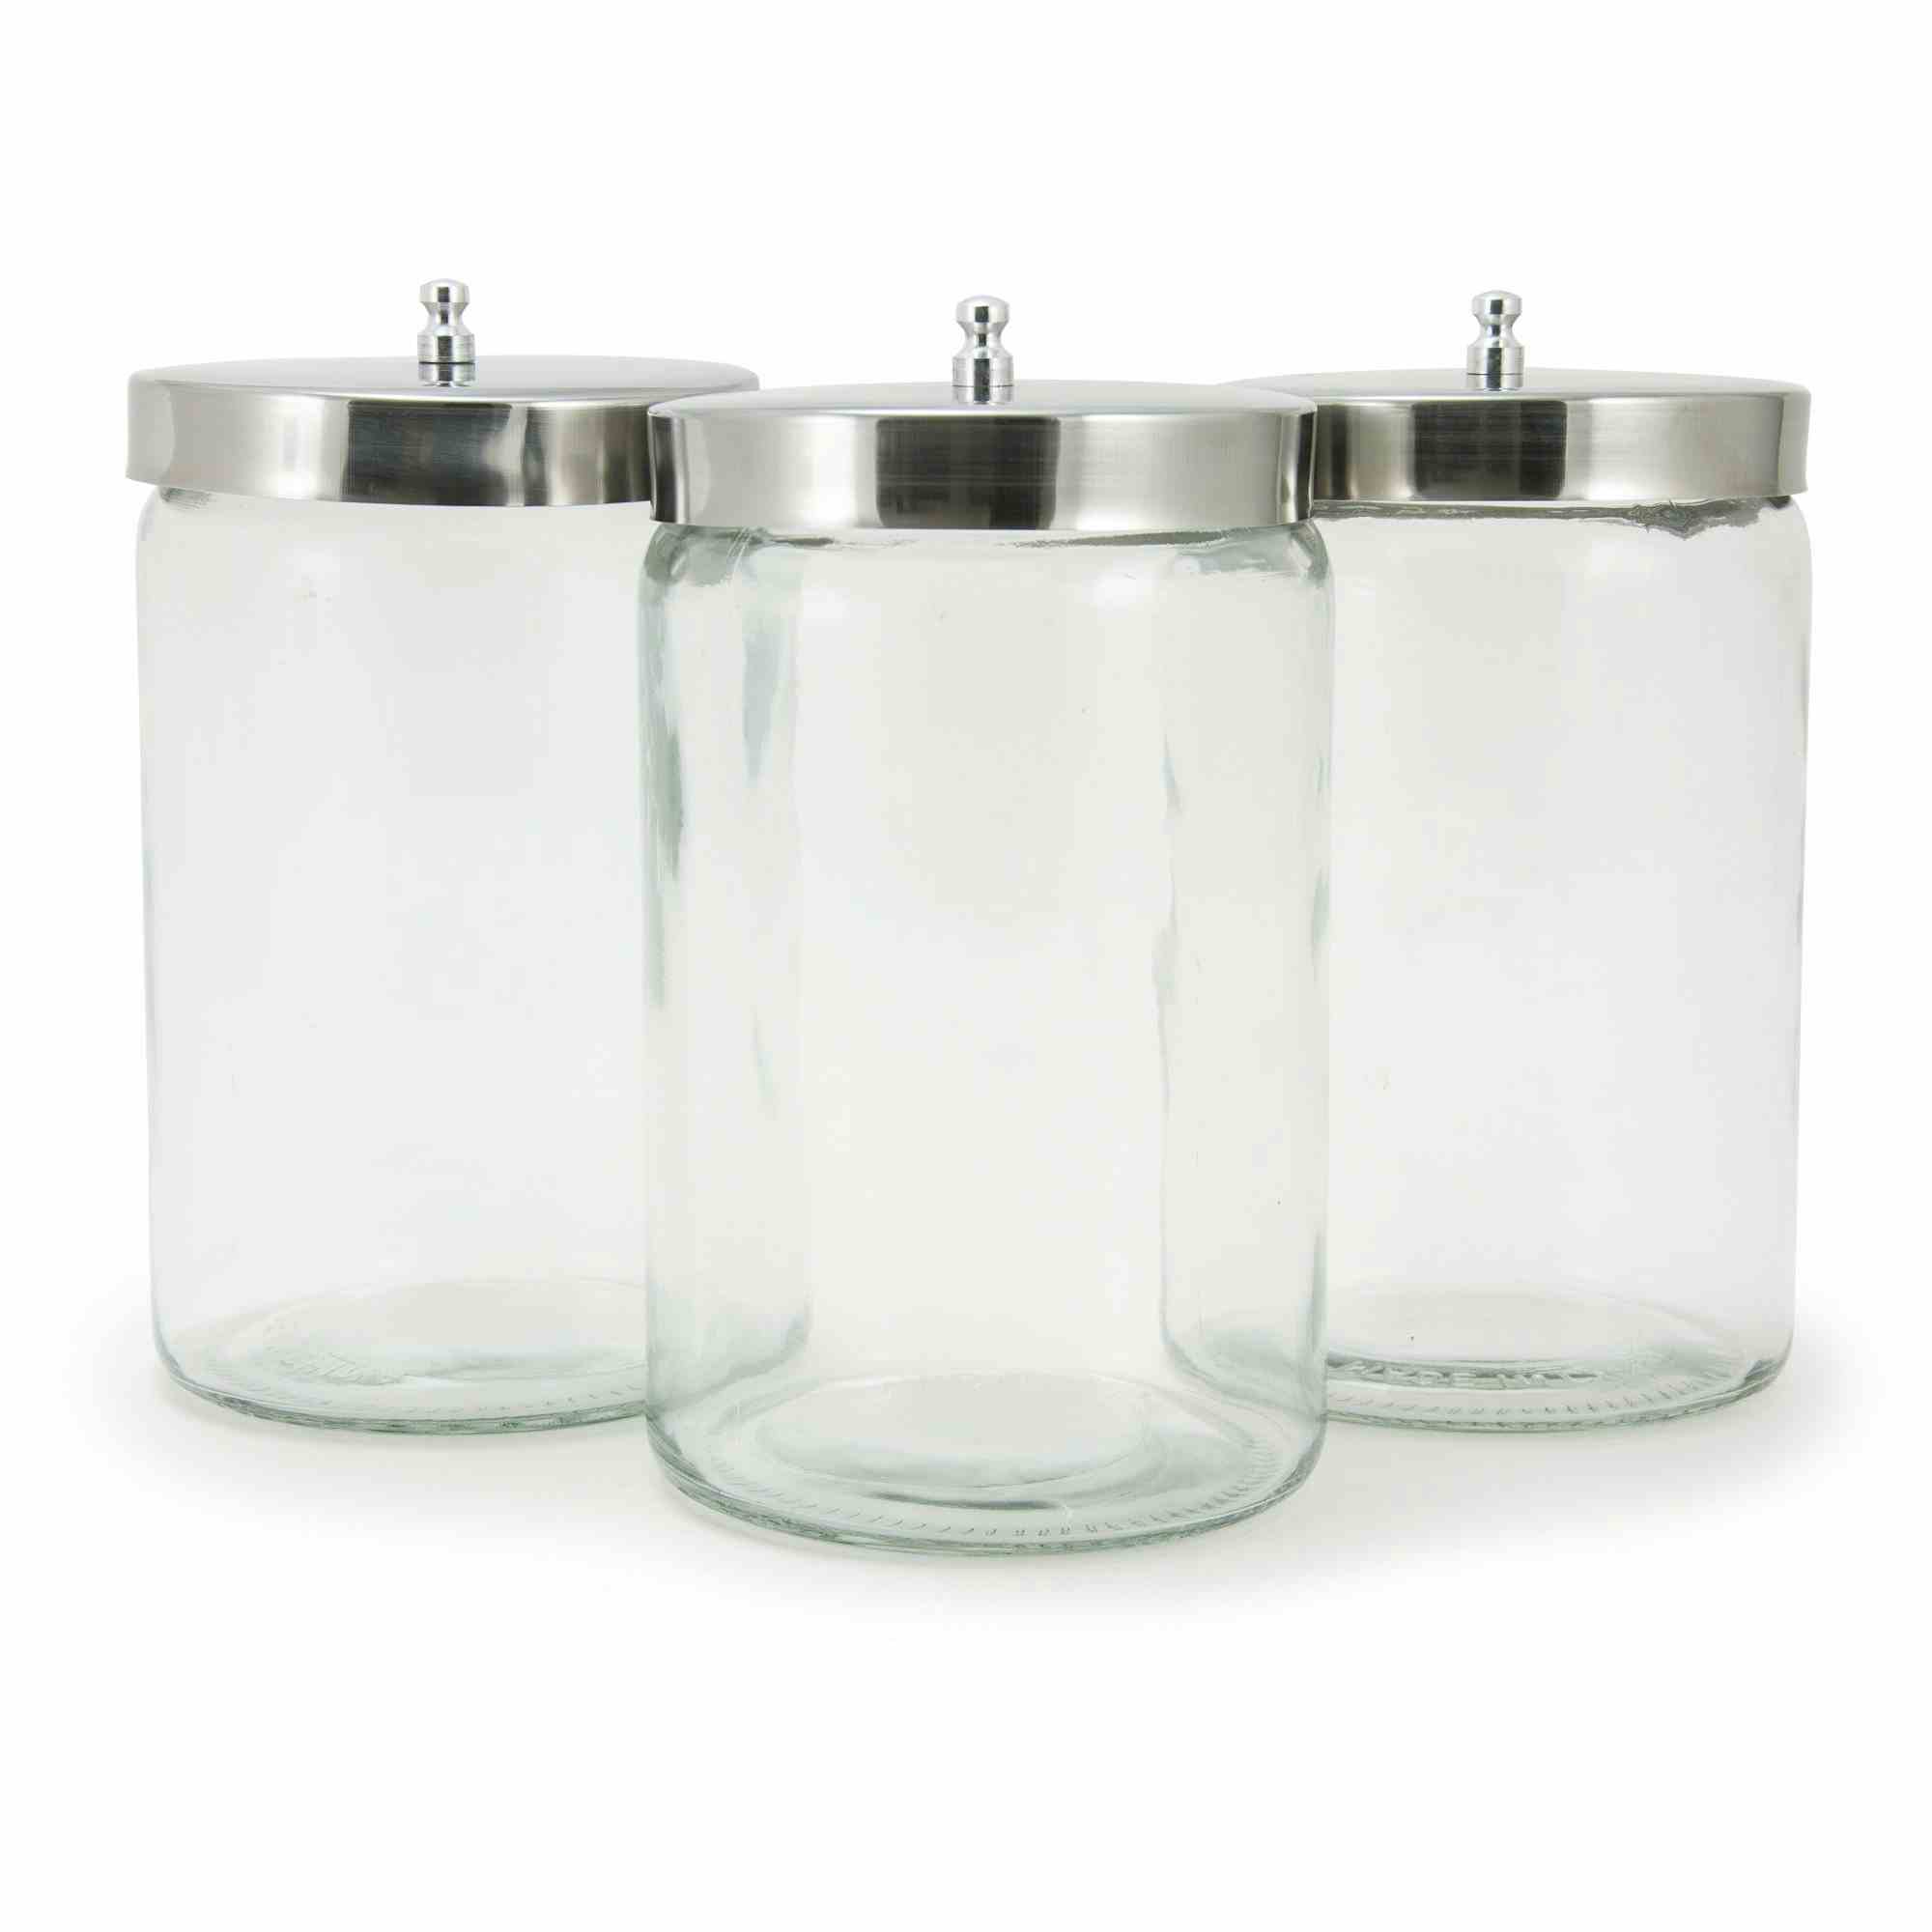 McKesson Sundry Glass Jar, 63-4012, 1 Each